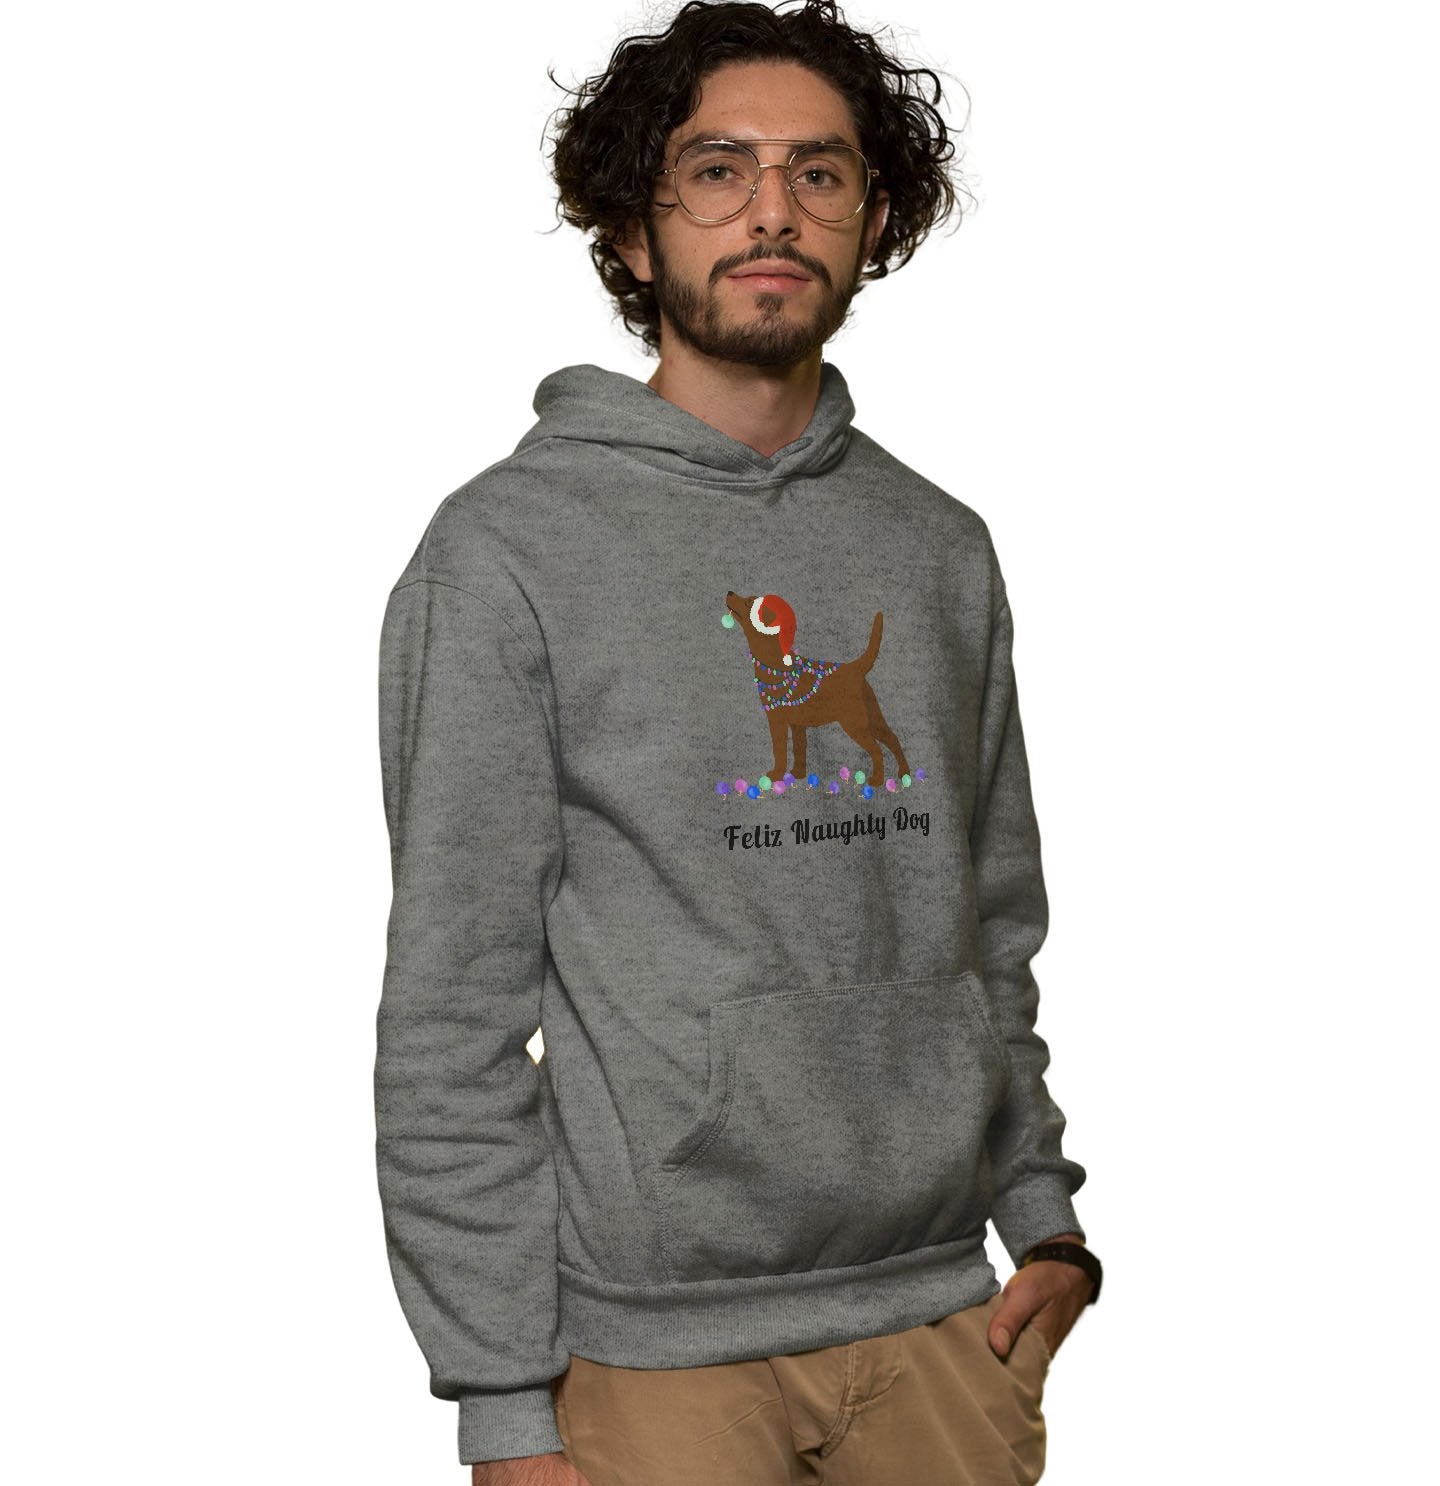 Feliz Naughty Dog Chocolate Lab - Adult Unisex Hoodie Sweatshirt